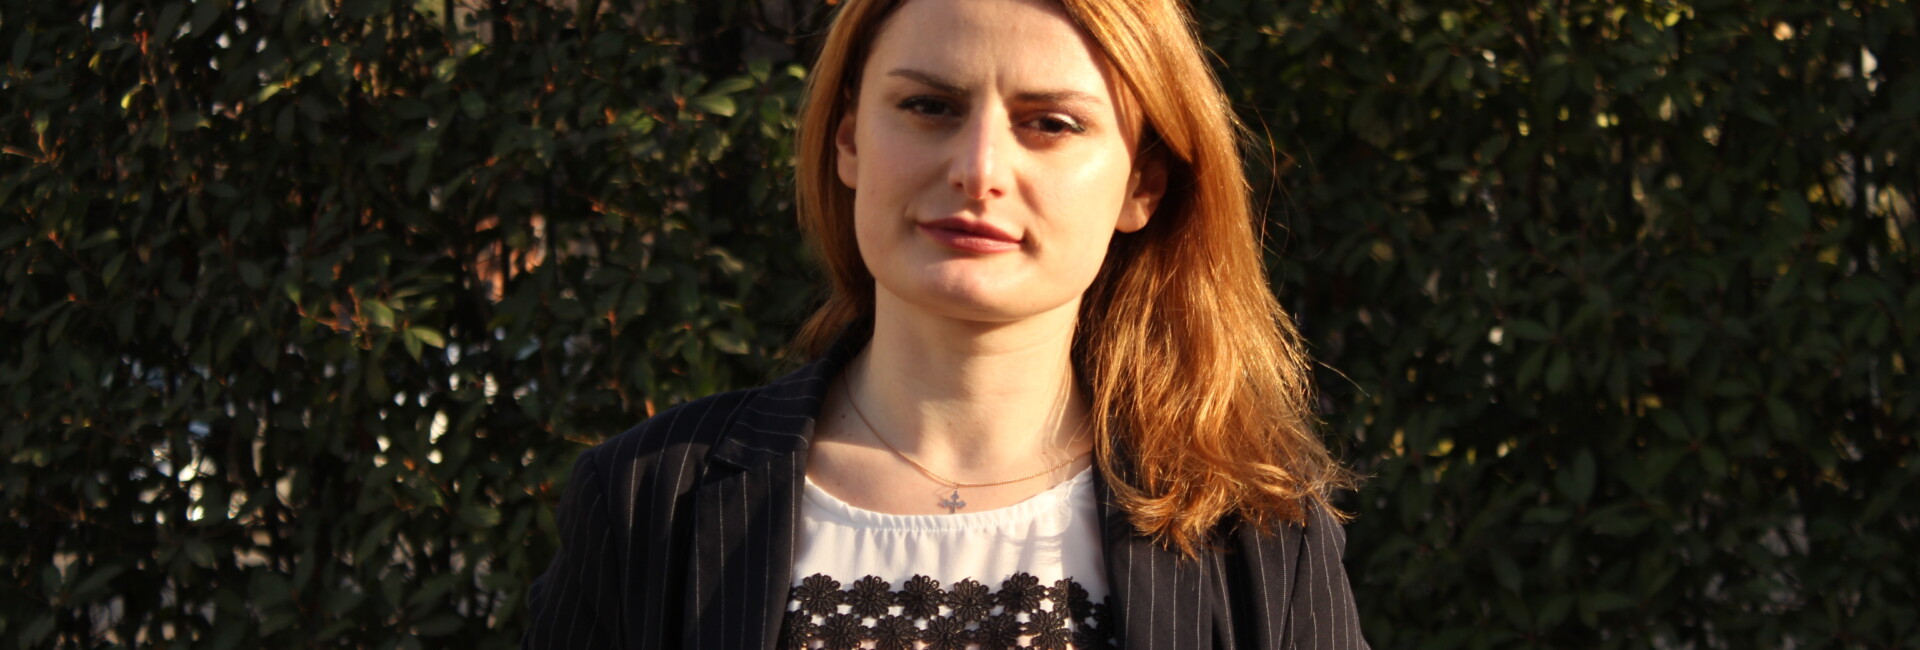 Mariam Gogoreliani